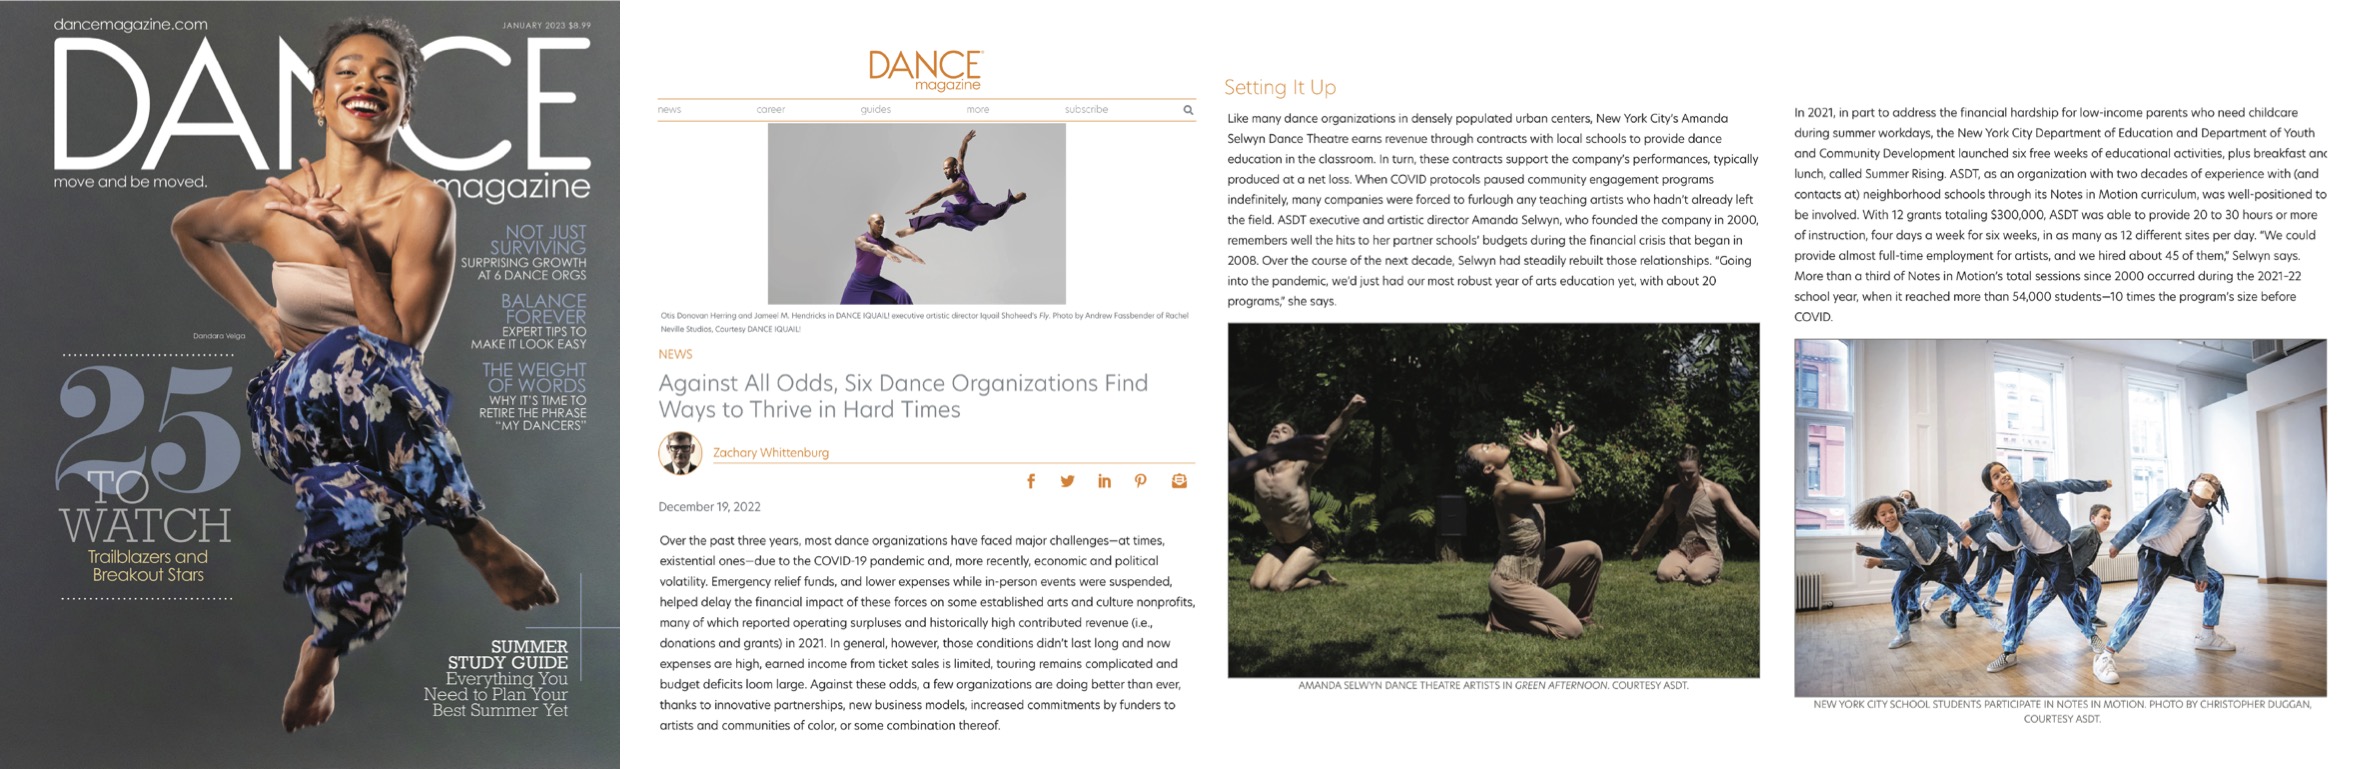 Company Updates - Amanda Selwyn Dance Theatre